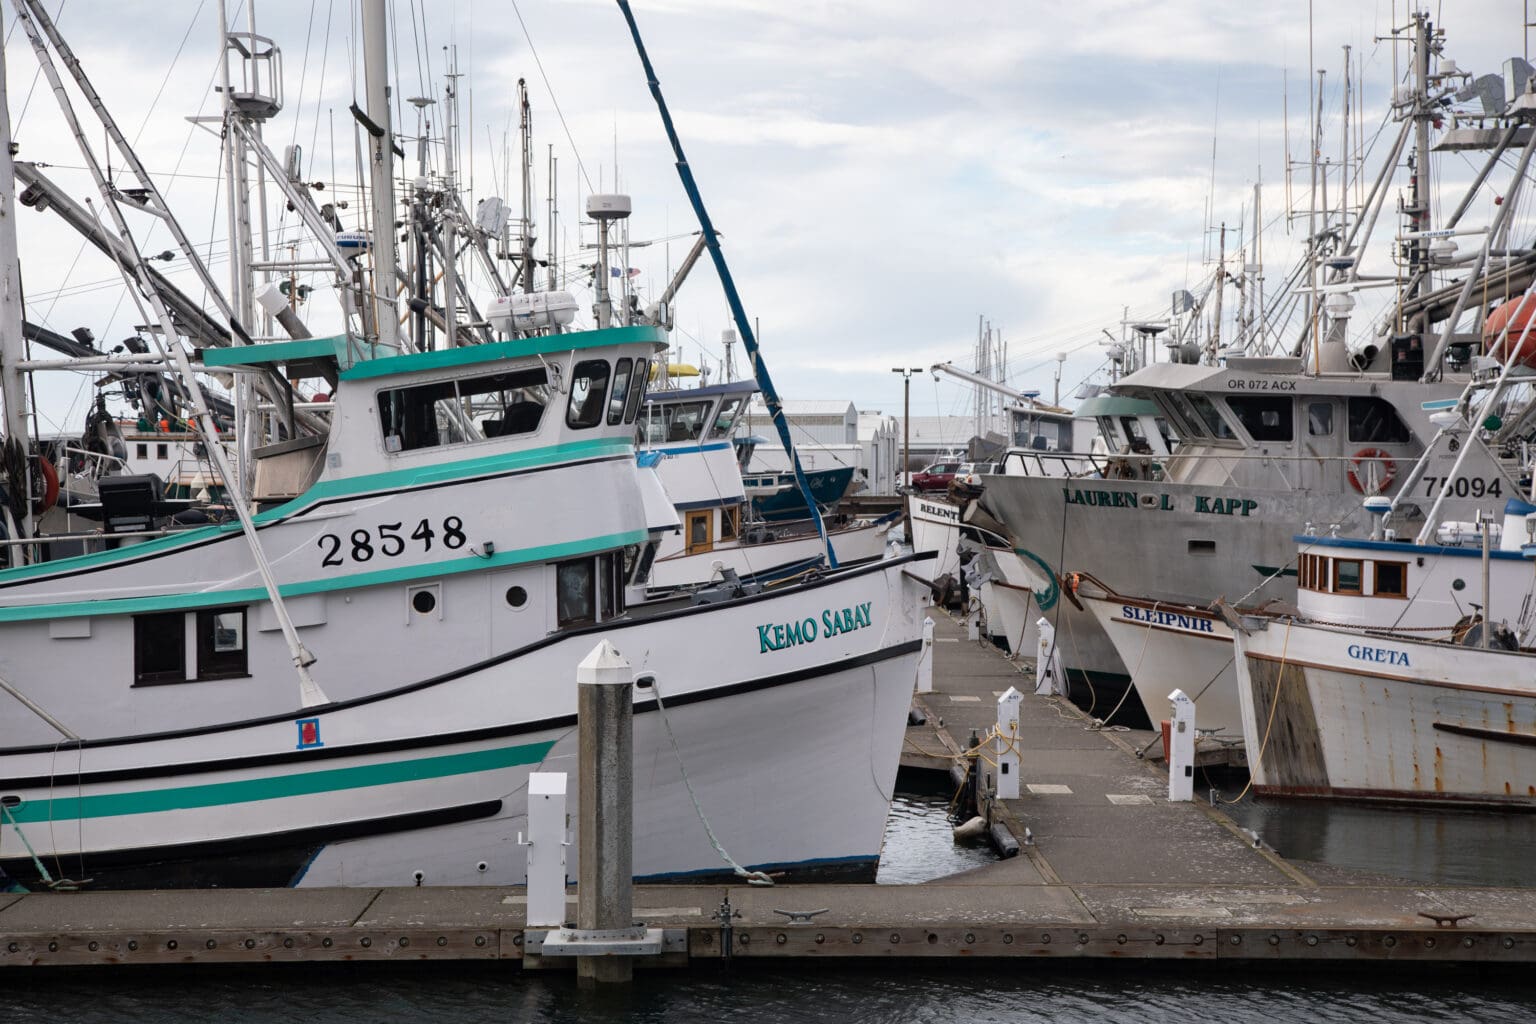 Fishing vessels line Squalicum Harbor. Commercial vessels